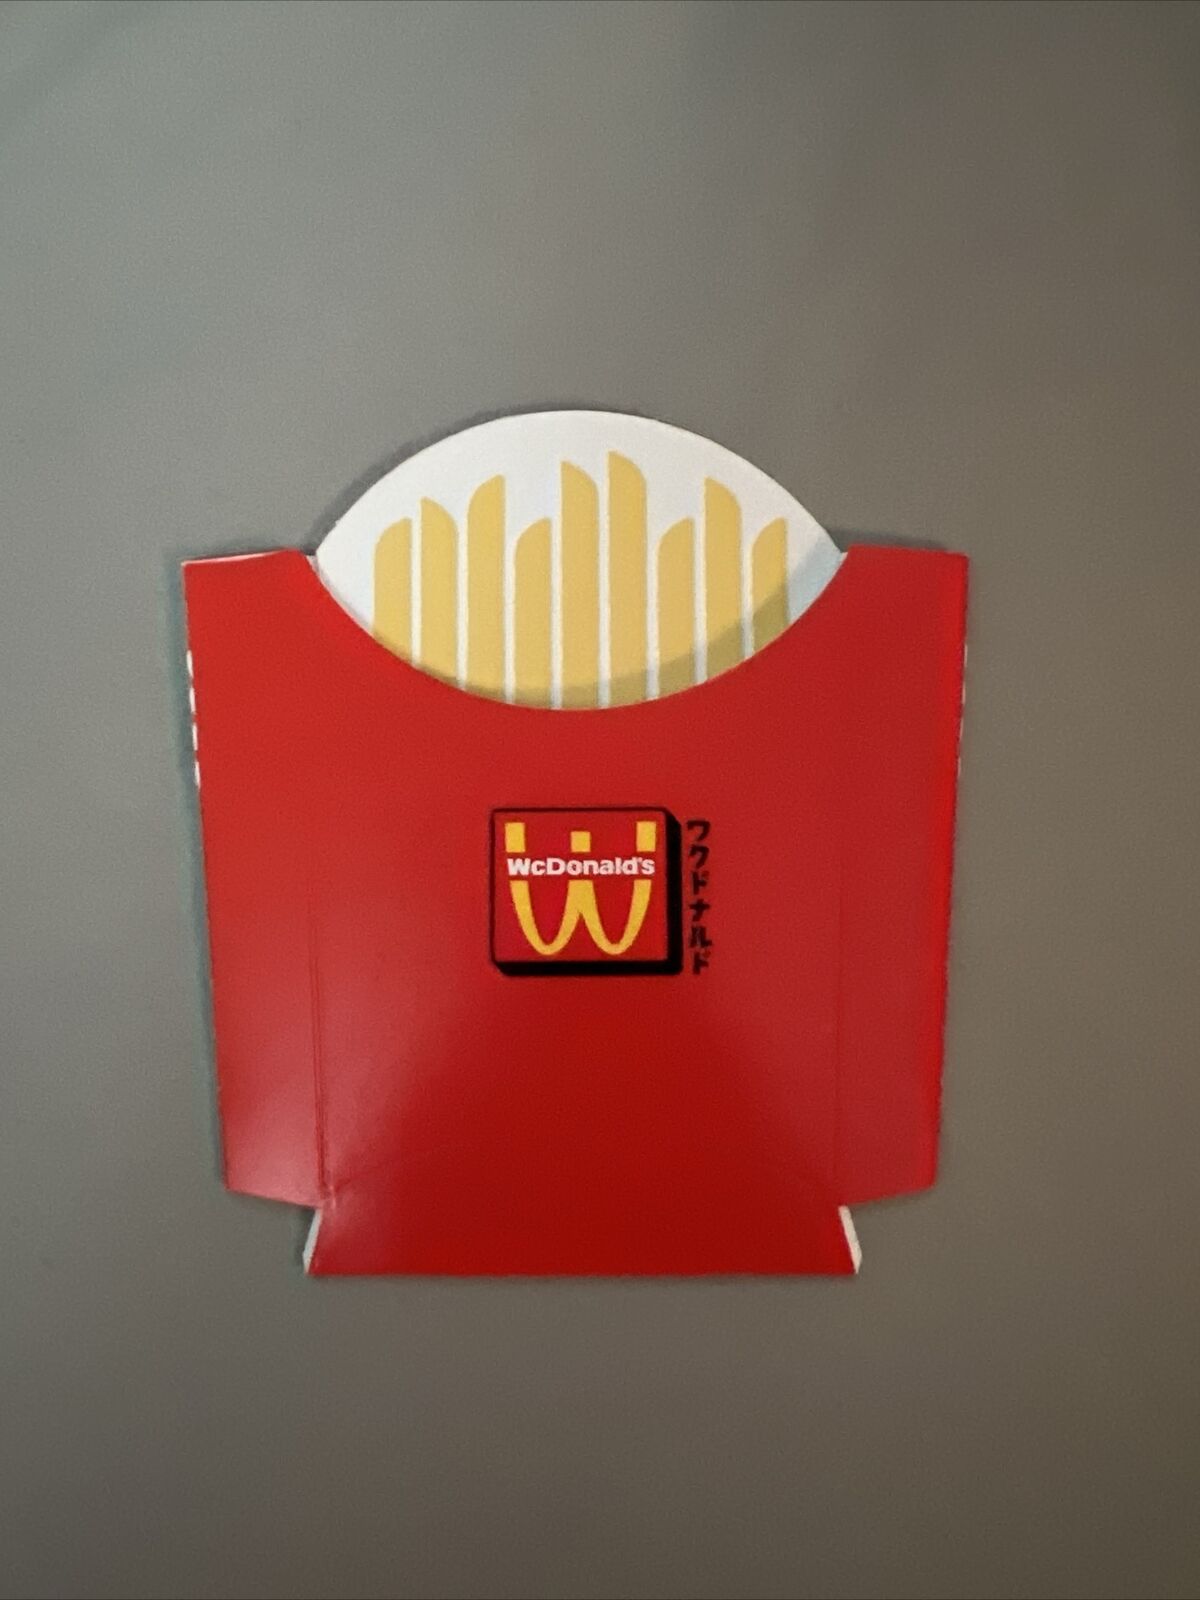 McDonald’s WcDonalds Medium Fry Box - UNUSED